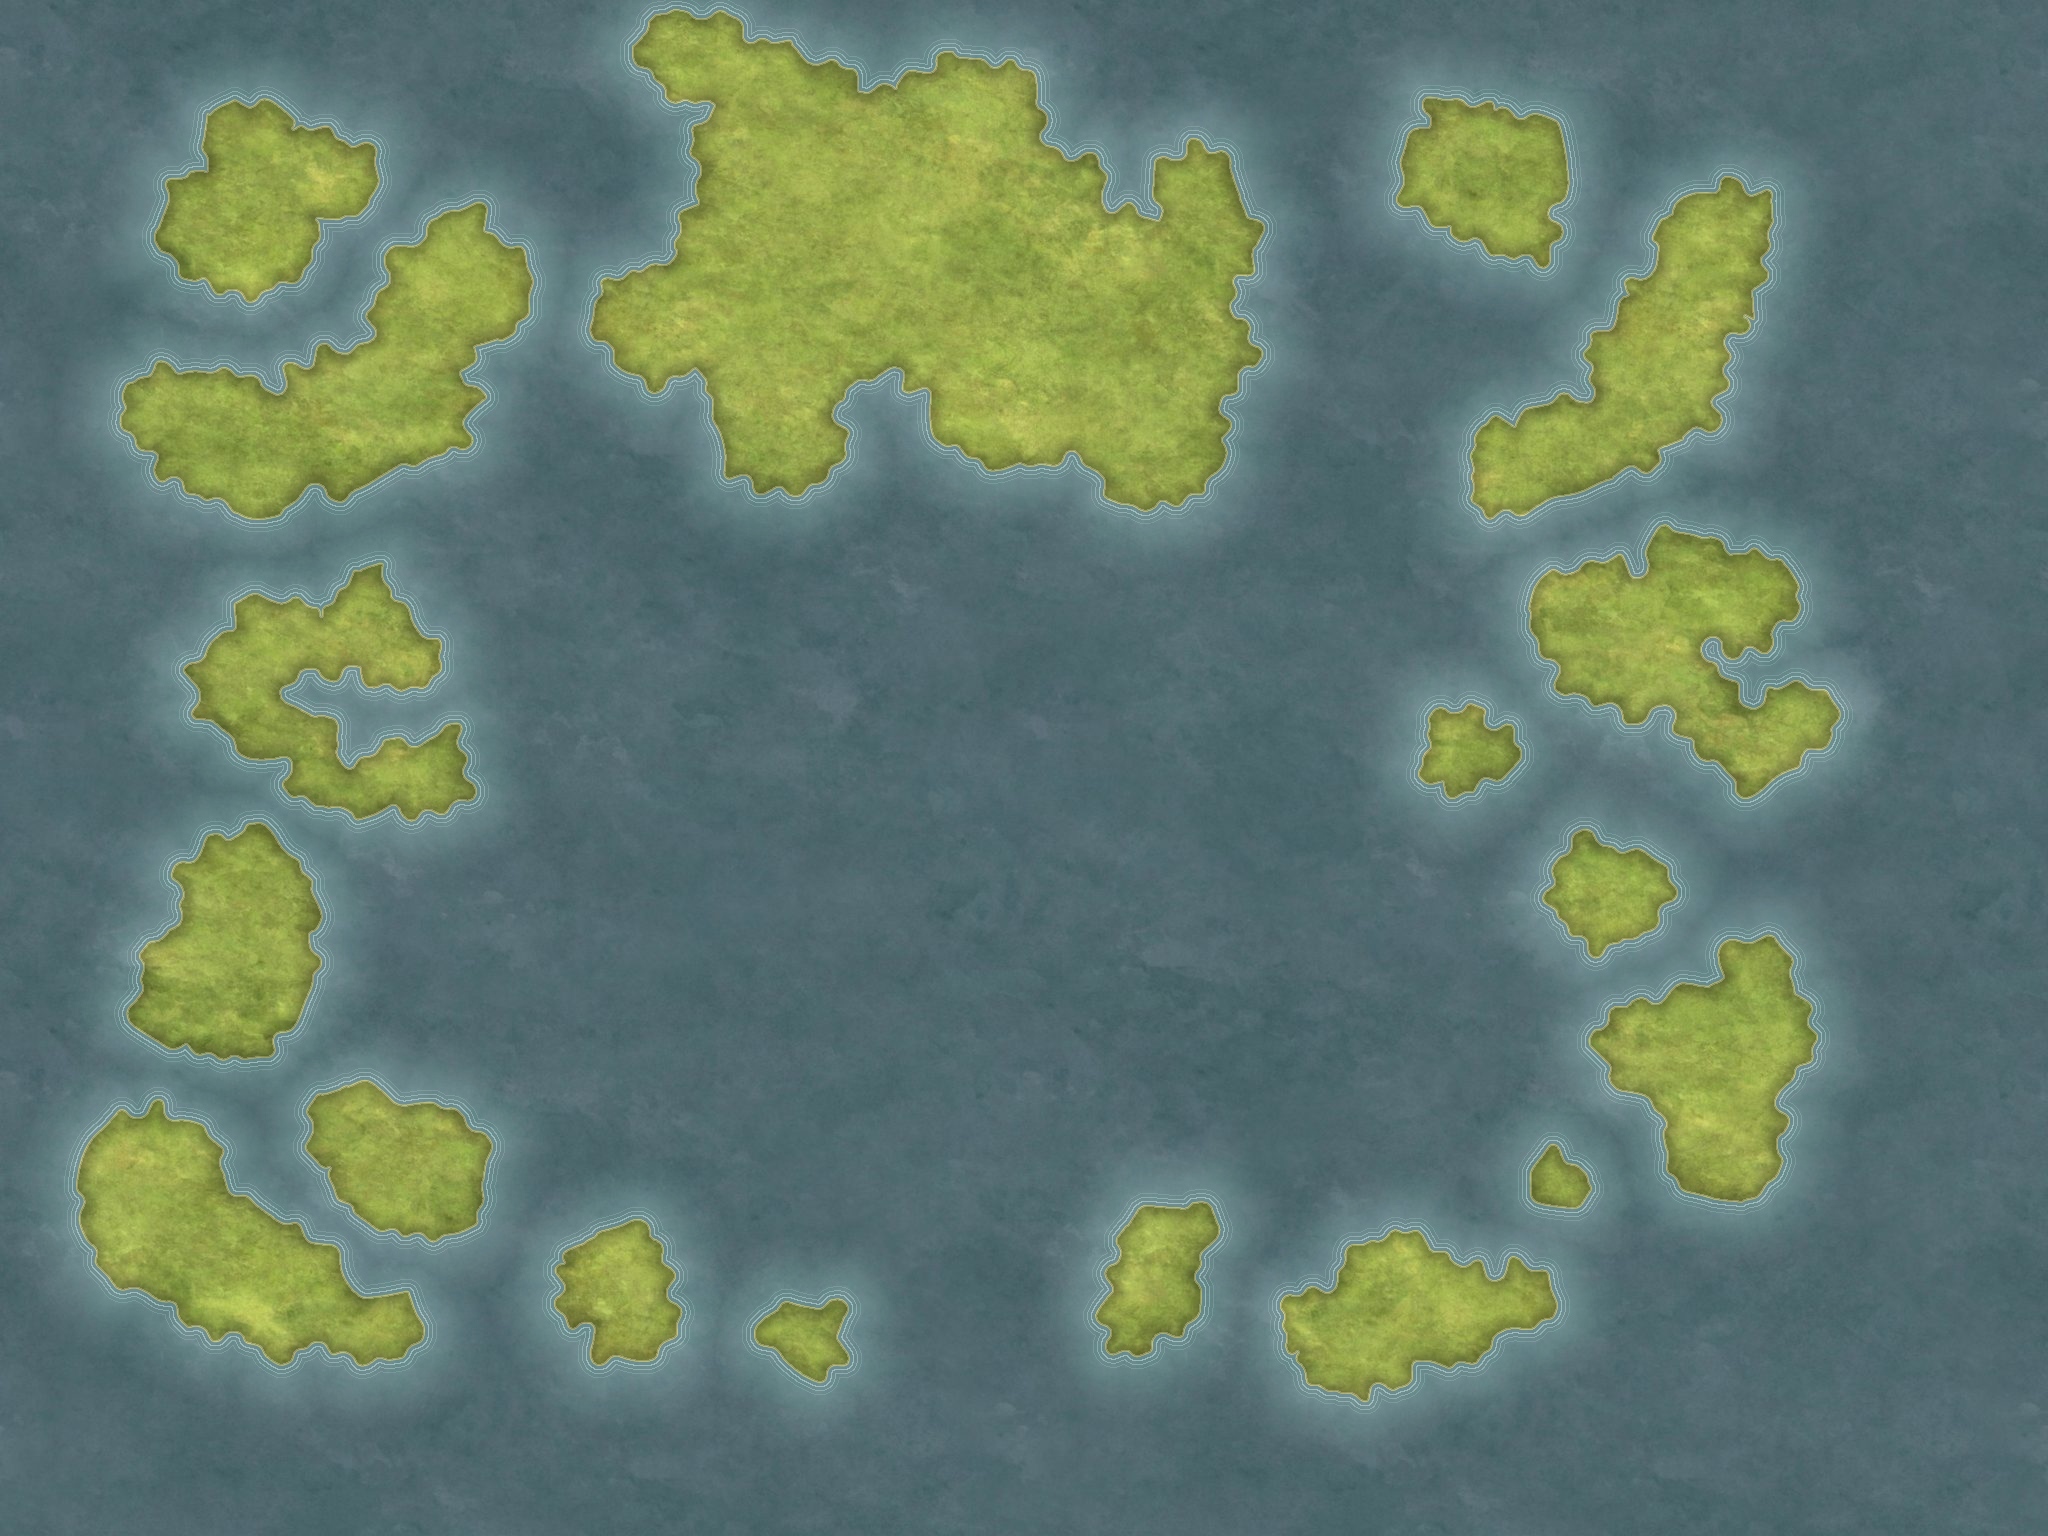 Ilia Bay Base Map Image